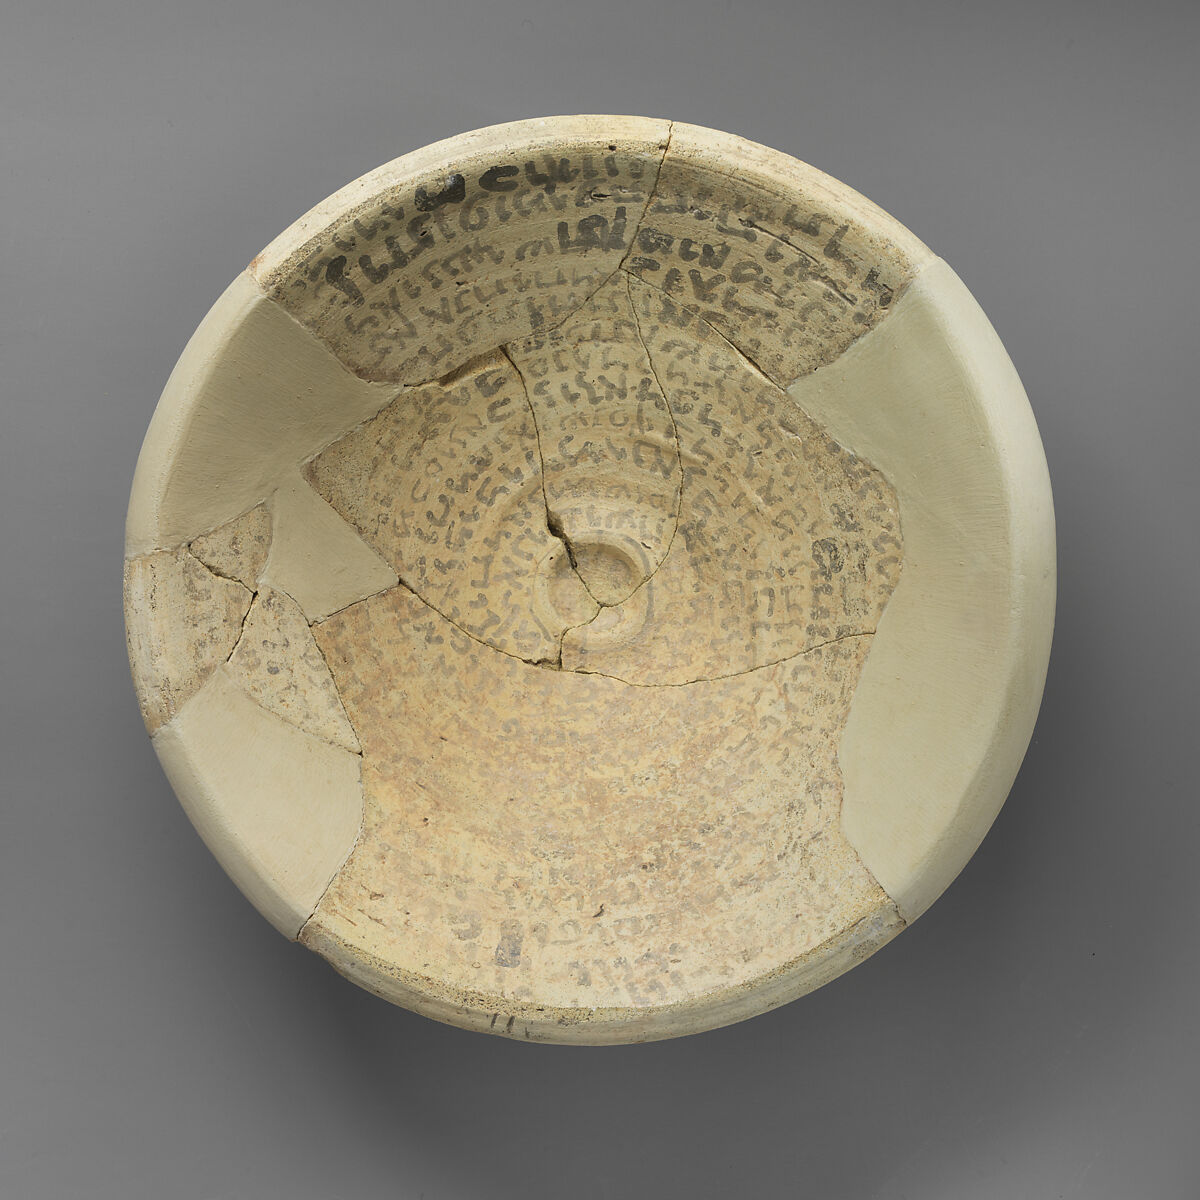 Incantation bowl with Aramaic inscription, Ceramic, Sasanian 